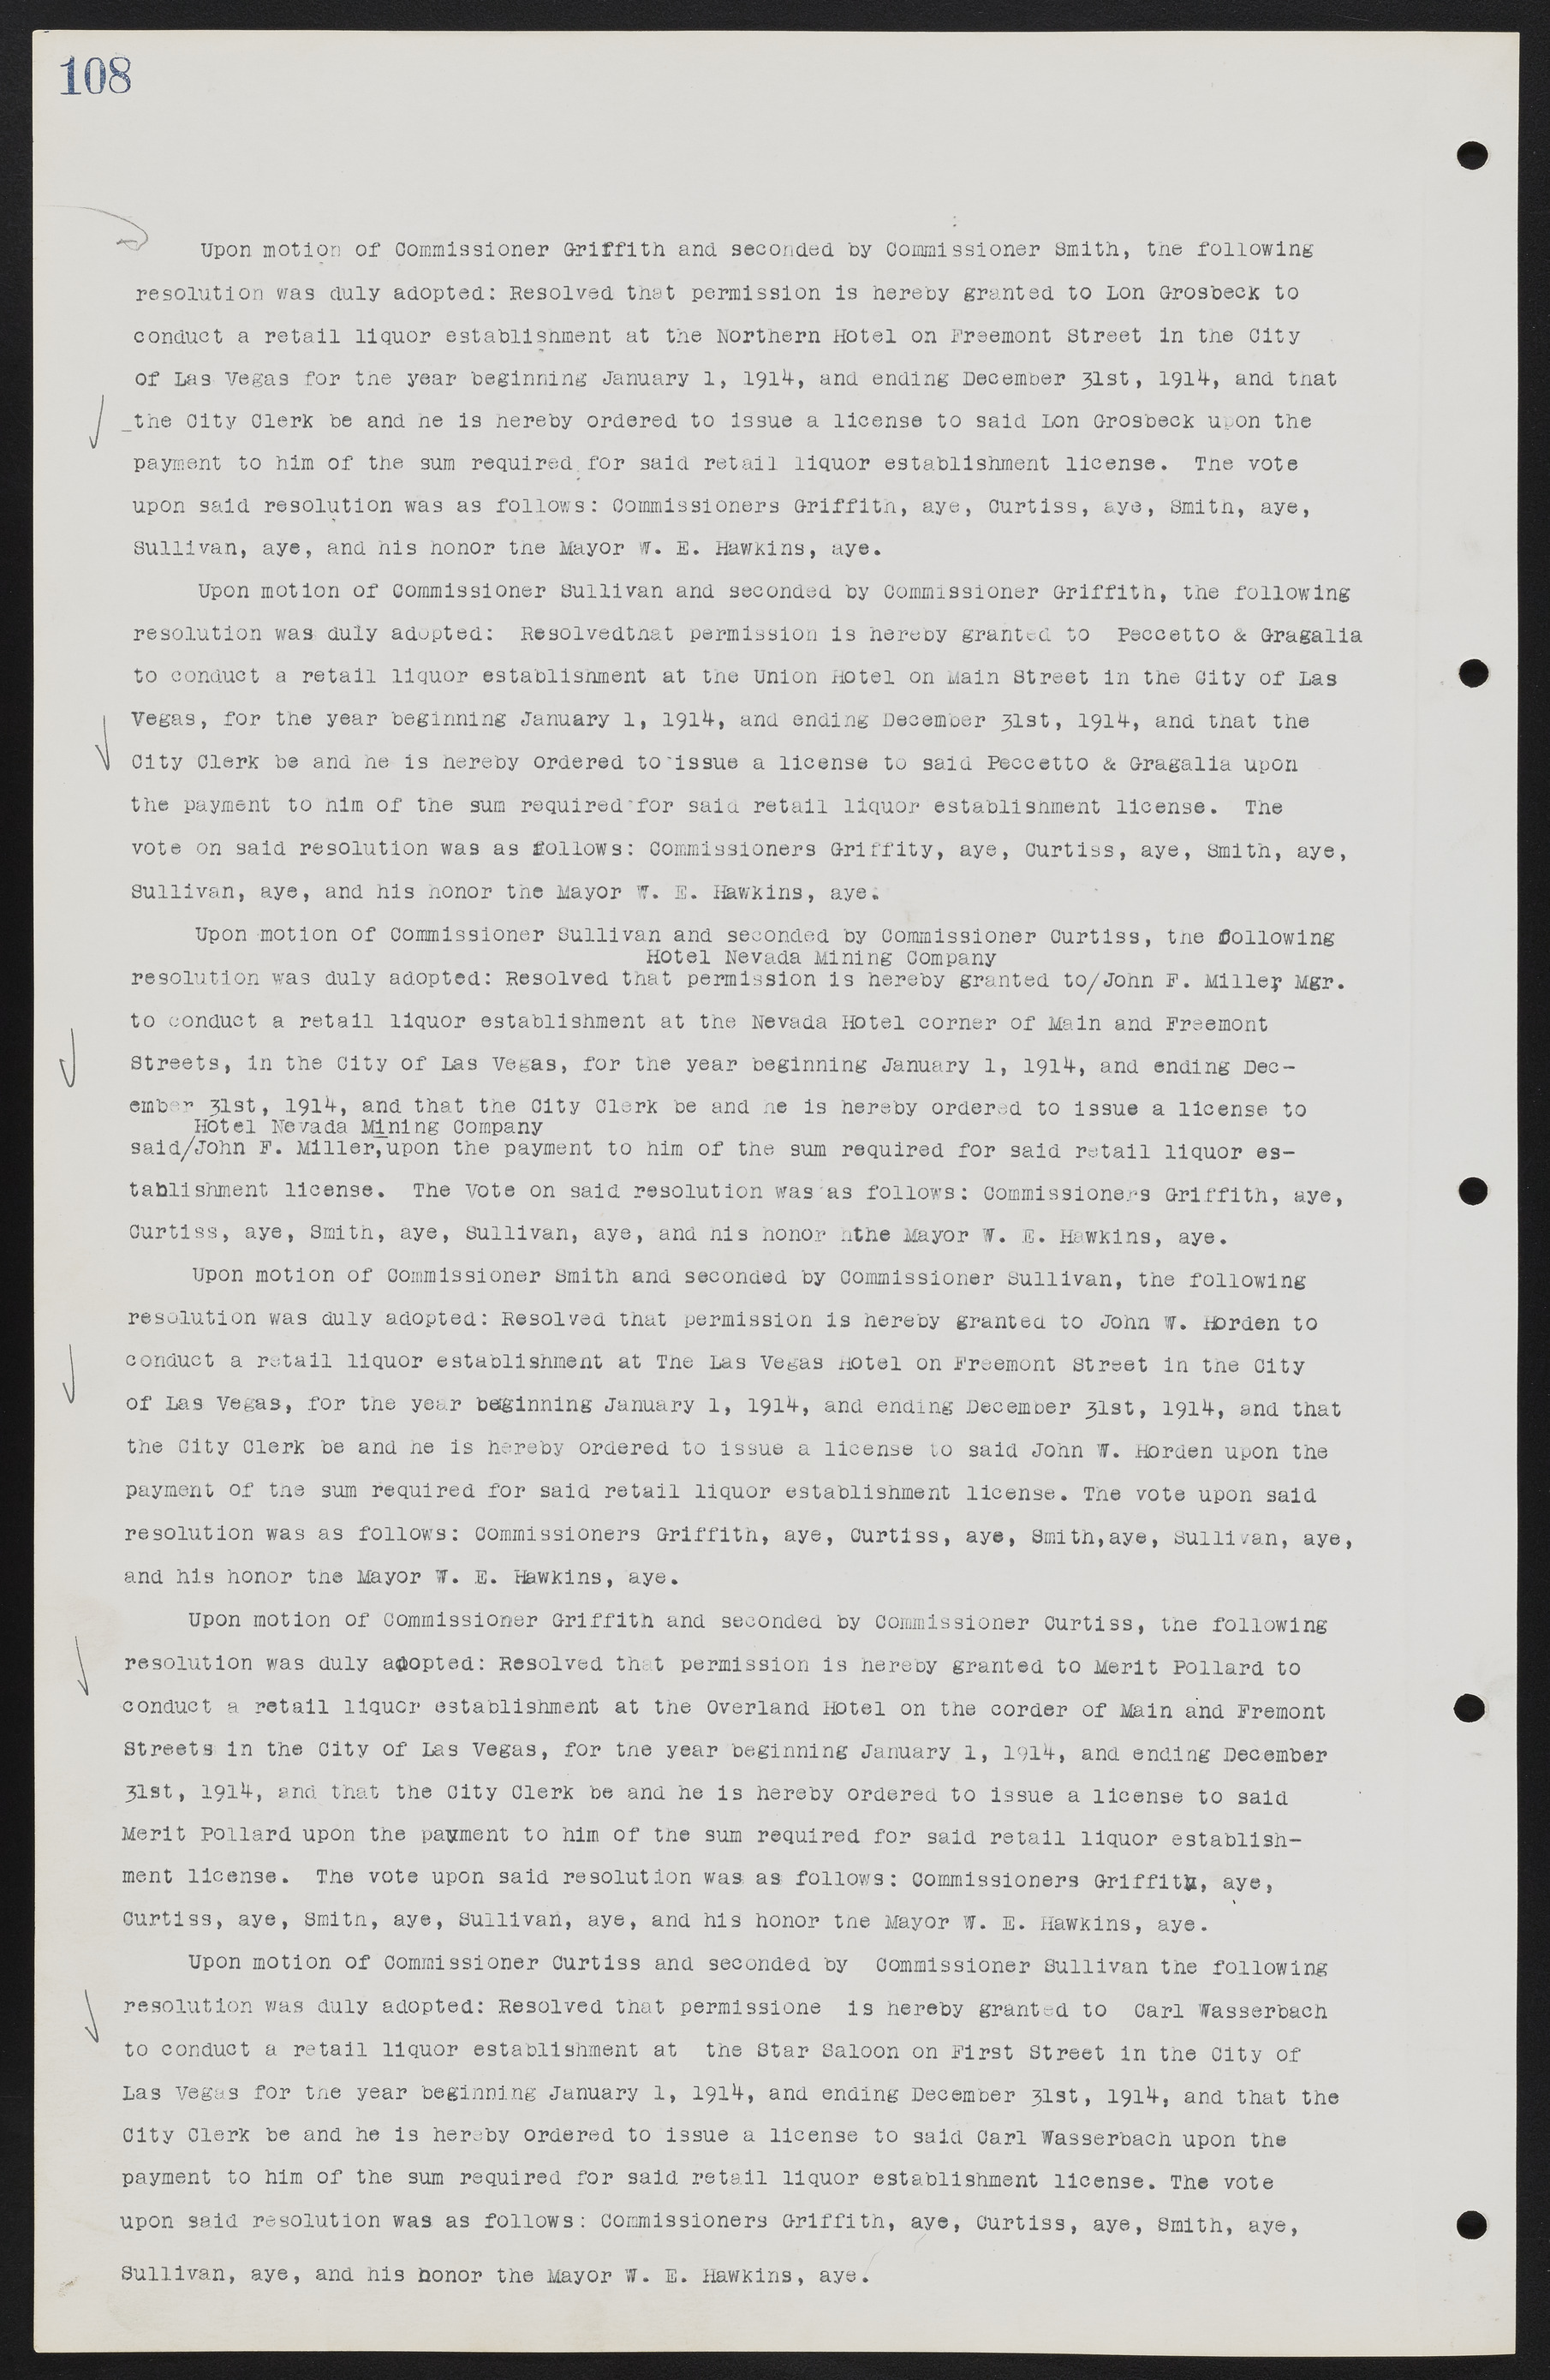 Las Vegas City Commission Minutes, June 22, 1911 to February 7, 1922, lvc000001-122